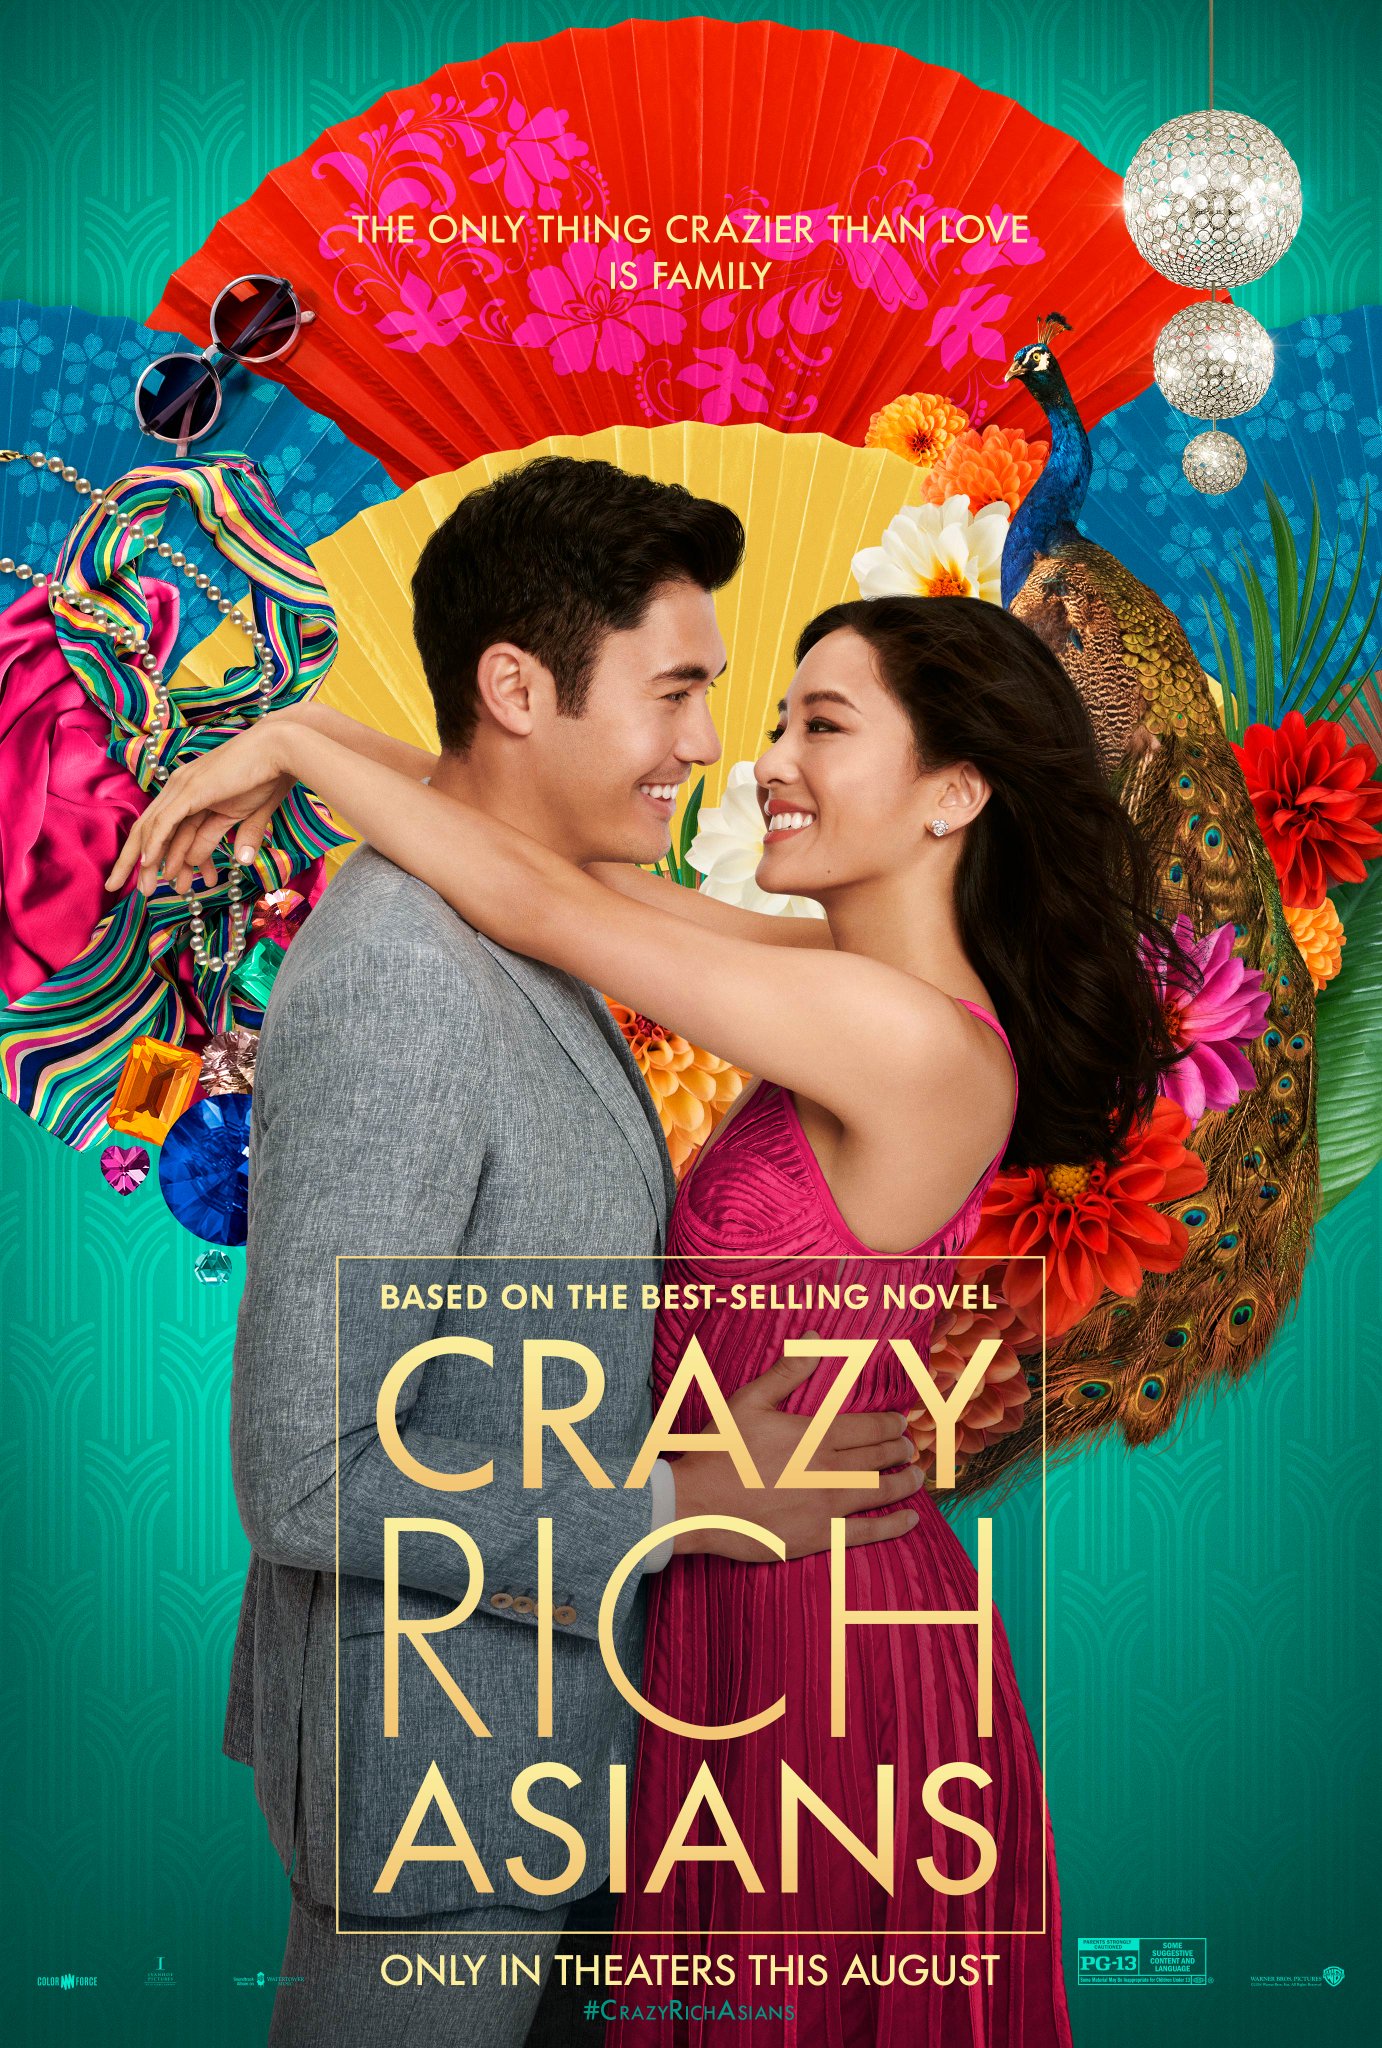 Warner Bros. Crazy Rich Asians